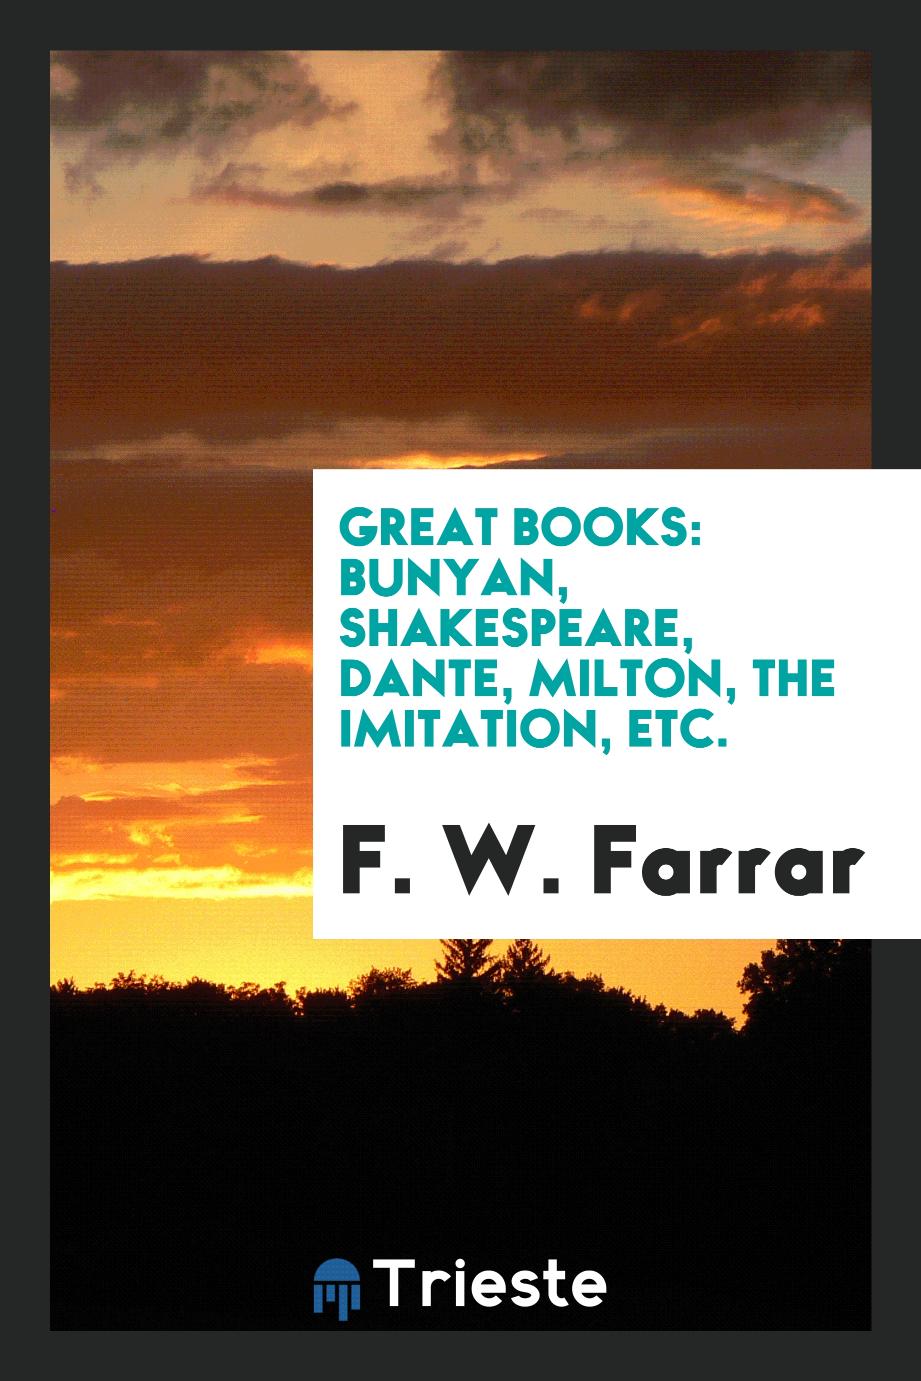 Great Books: Bunyan, Shakespeare, Dante, Milton, The Imitation, Etc.